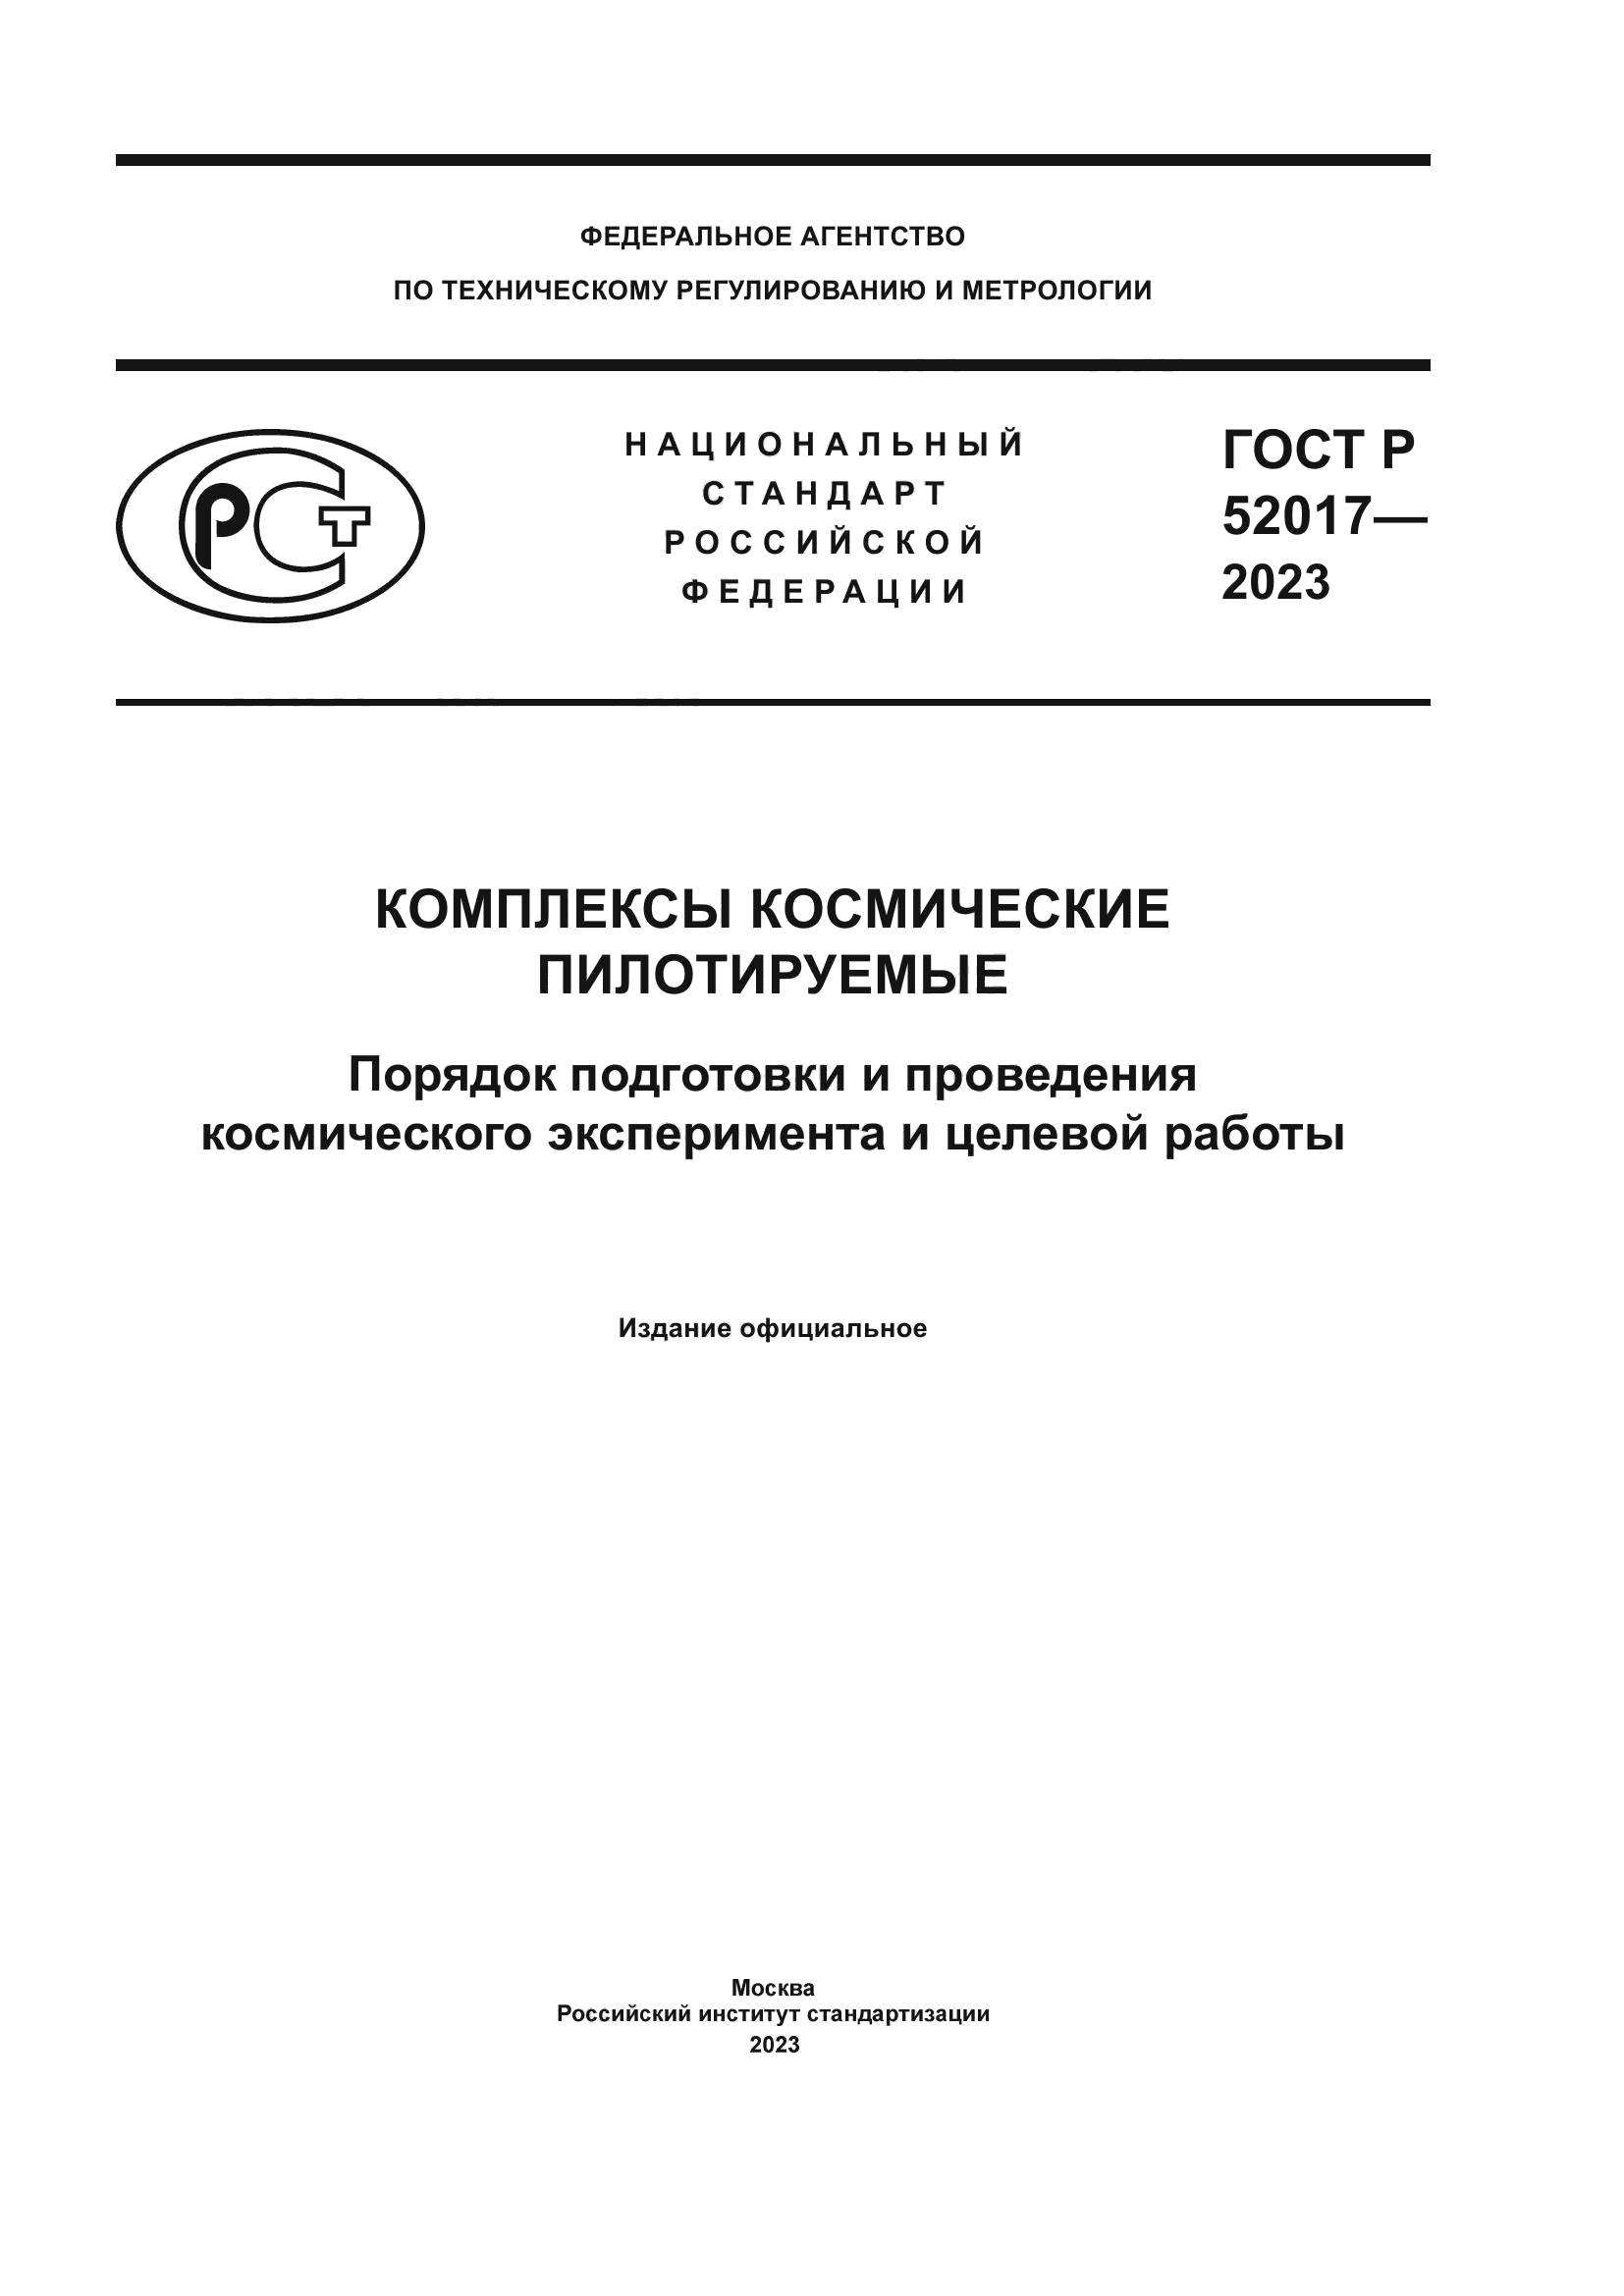 ГОСТ Р 52017-2023